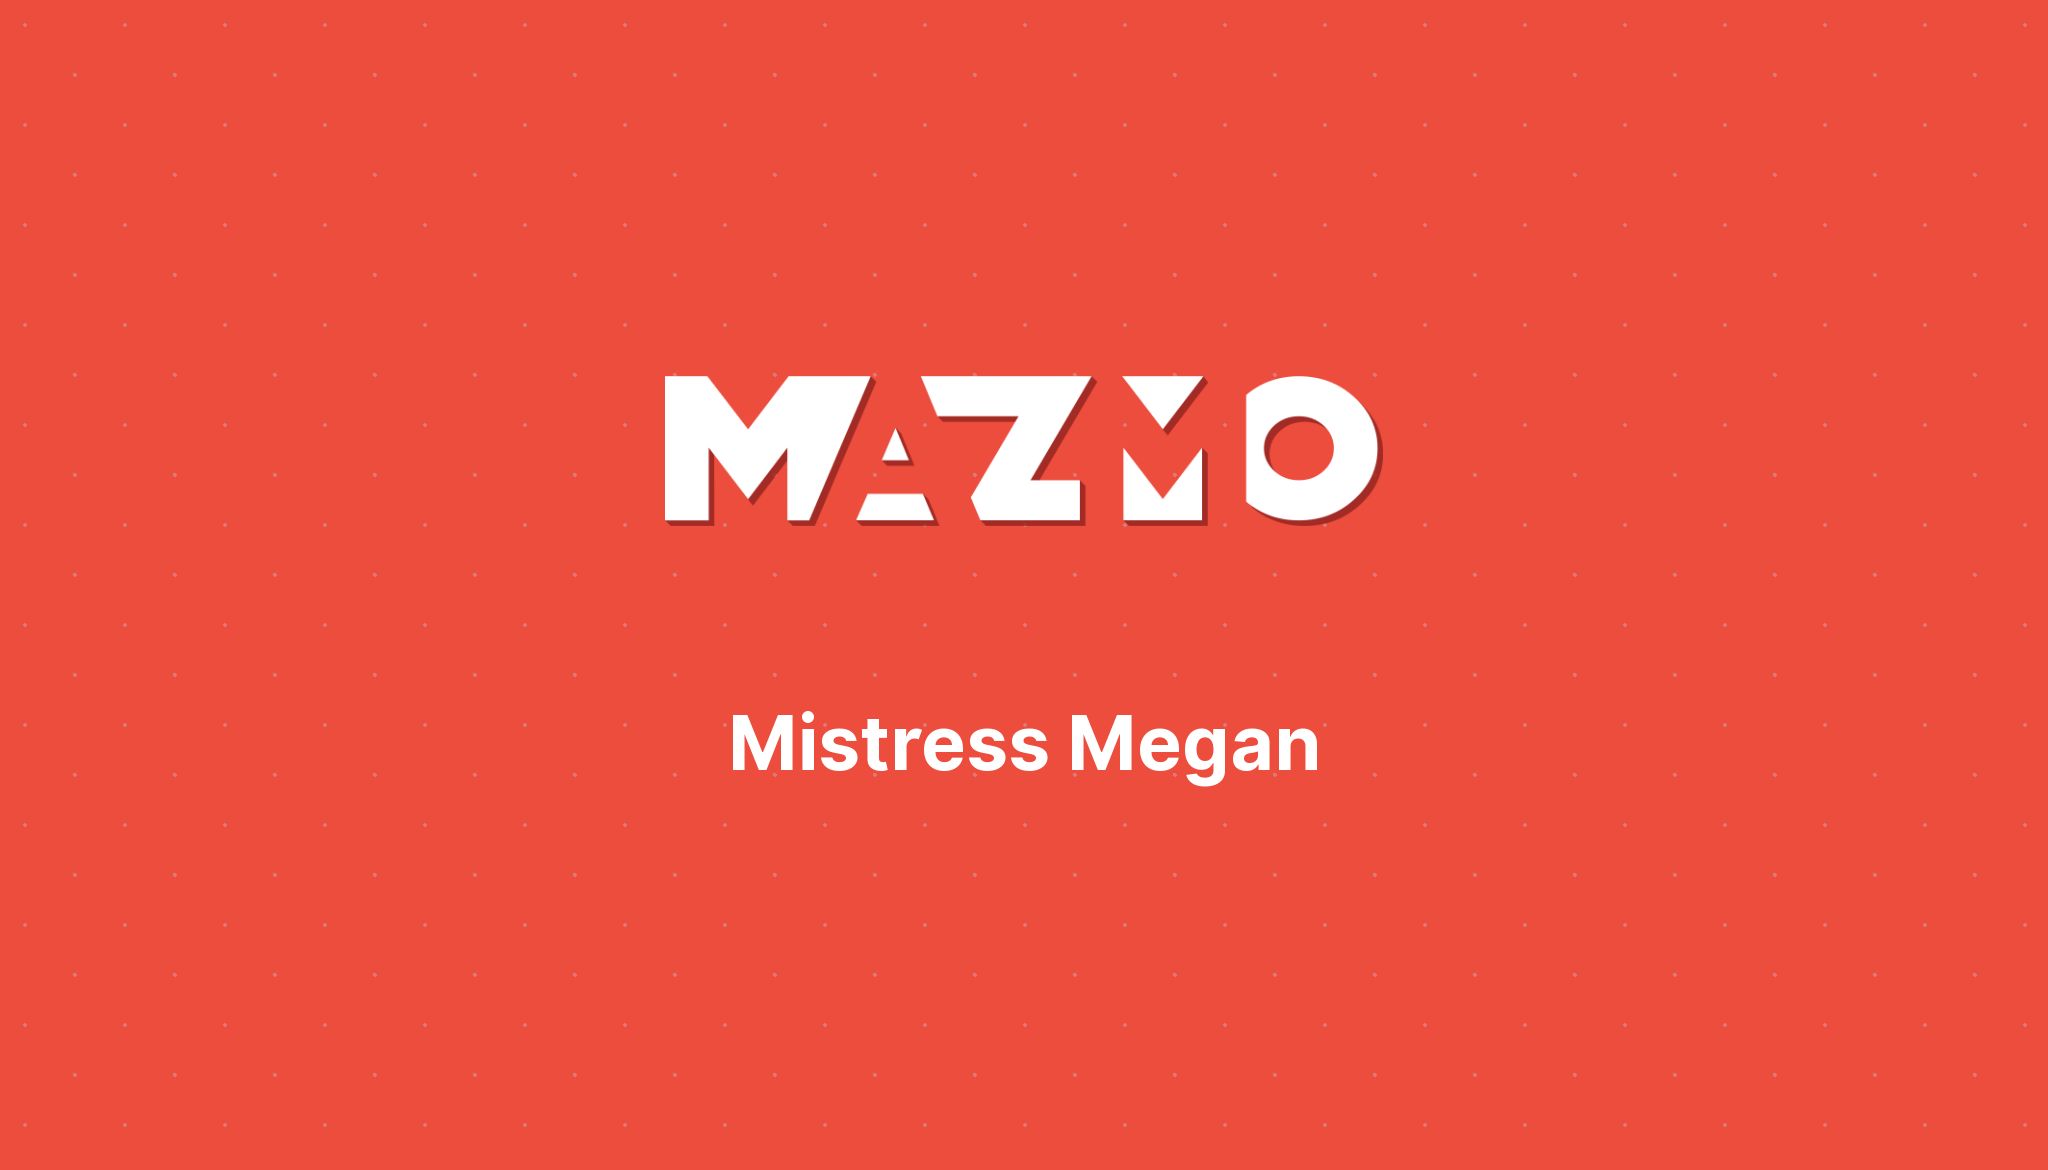 Mistress Megan Mazmo